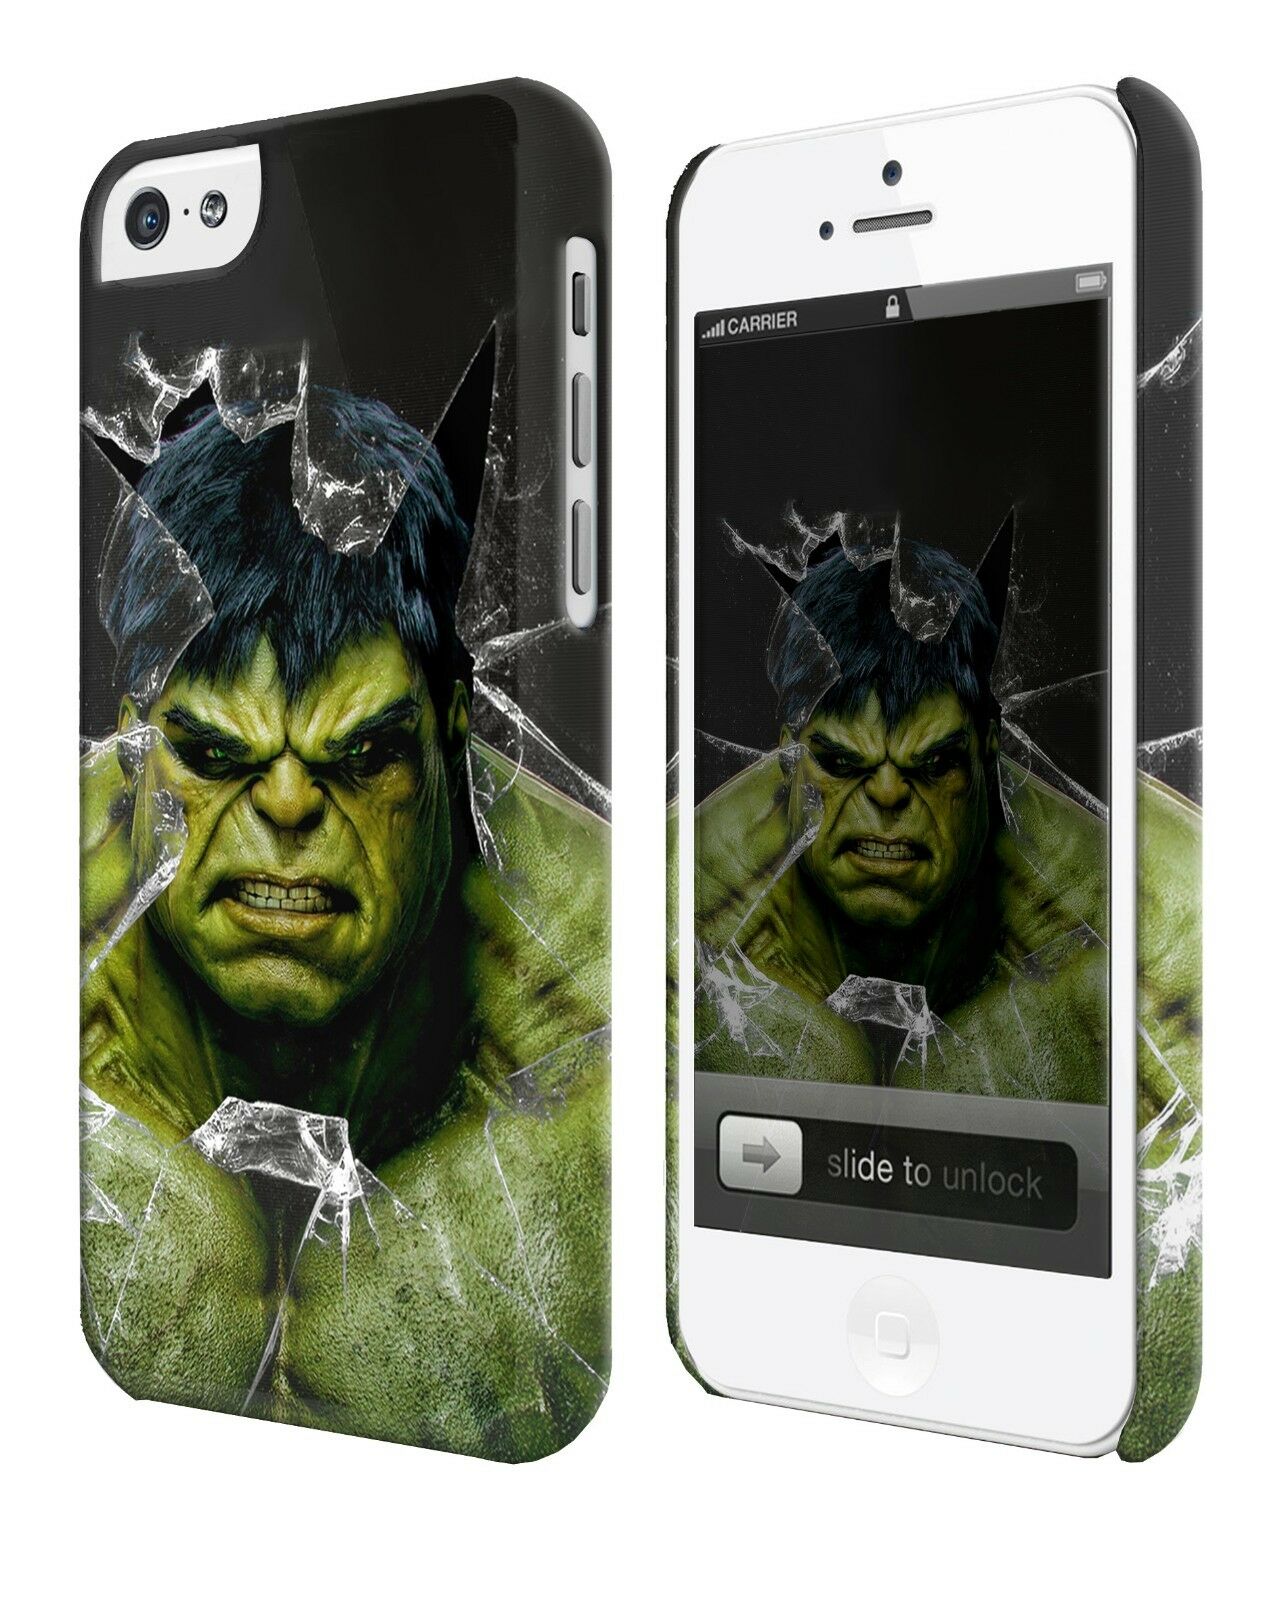 Incredible Hulk Superhero Marvel Iphone 4s 5s 6 7 8 X XS Max XR 11 Pro Plus Case caselegendcaselegend 